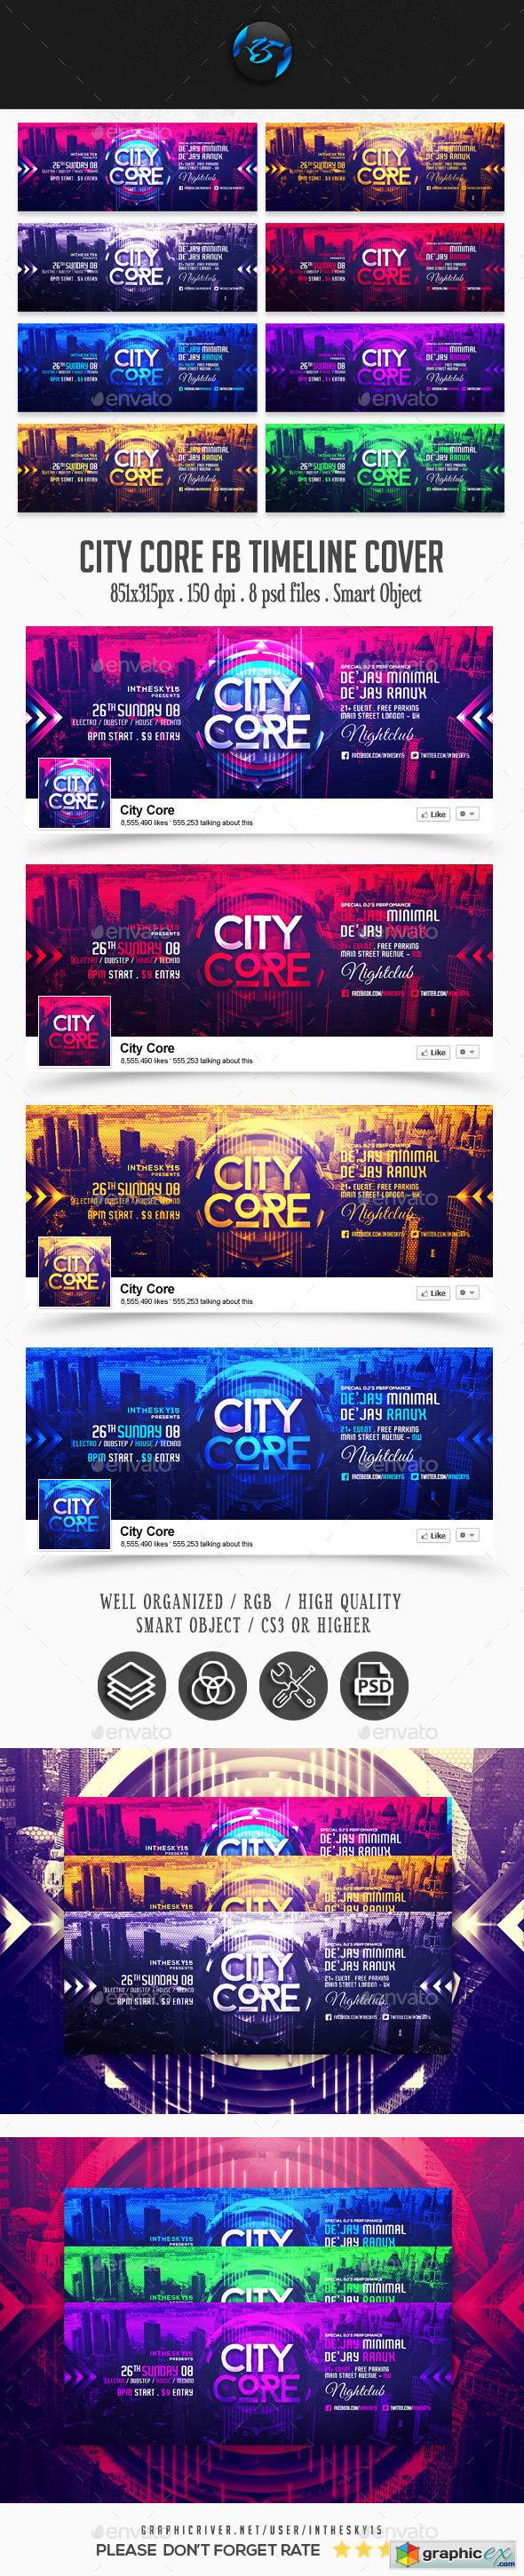 City Core FB Timeline Cover